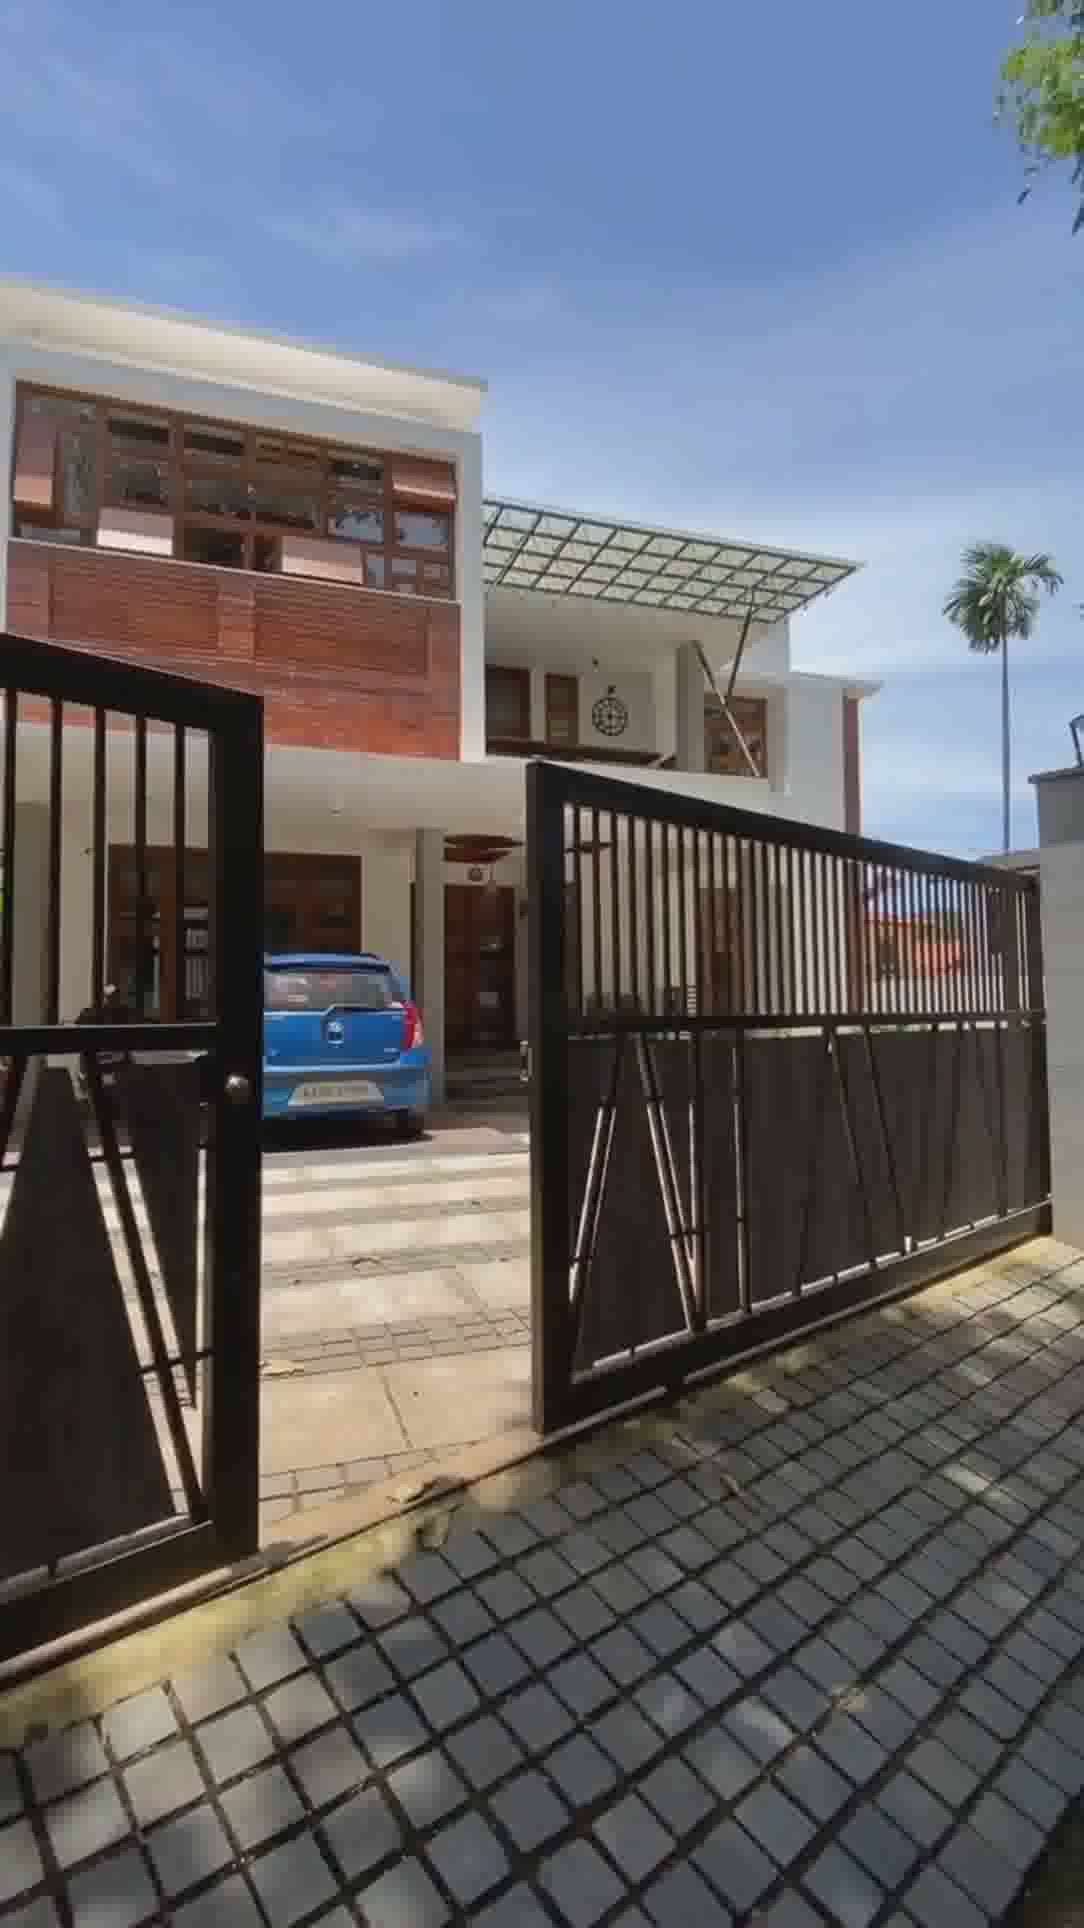 Deepthik Divakaran
Architect
Kozhikode, Kerala
ADIS Designs & Contracting LLP C ALICUT

Kolo video link: https://koloapp.in/posts/1629006869

Kolo - India’s Largest Home Construction Community :house:

#home #keralahouse #koloapp #keralagram #reelitfeelit #keralagodsowncountry #homedecor #enteveedu #homedesign #keralahomedesignz #keralavibes #instagood #interiordesign #interior #interiordesigner #homedecoration #homedesign #homedesignideas #keralahomes #homedecor #homes #homestyling #traditional #kerala #homesweethome #architecturedesign #architecture #keralaarchitecture #architecture